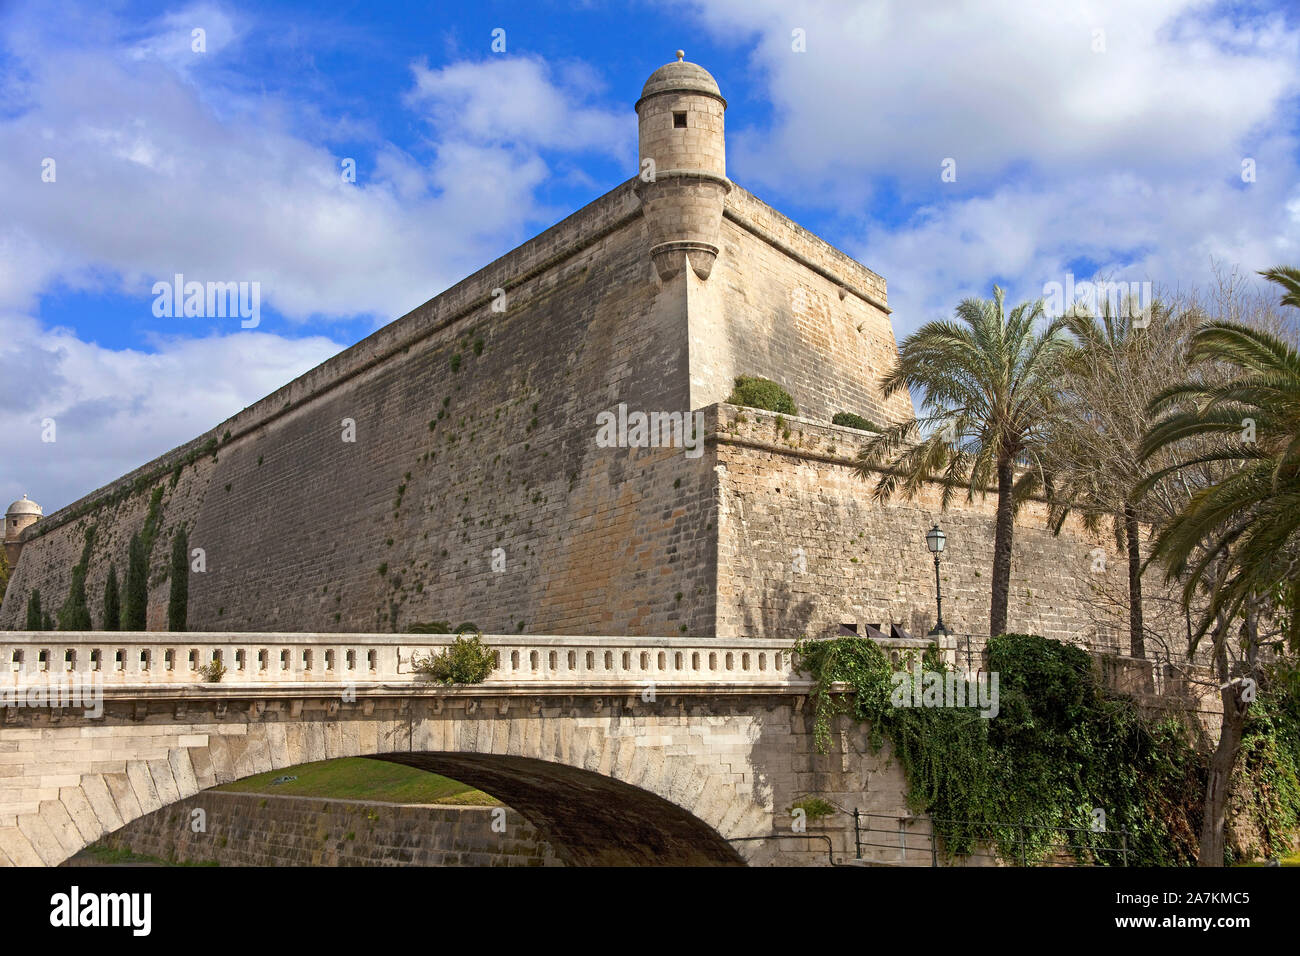 Baluard de Sant Pere, medieval fortress in the old town of Palma, Palma de Mallorca, Mallorca, Baleraric islands, Spain Stock Photo